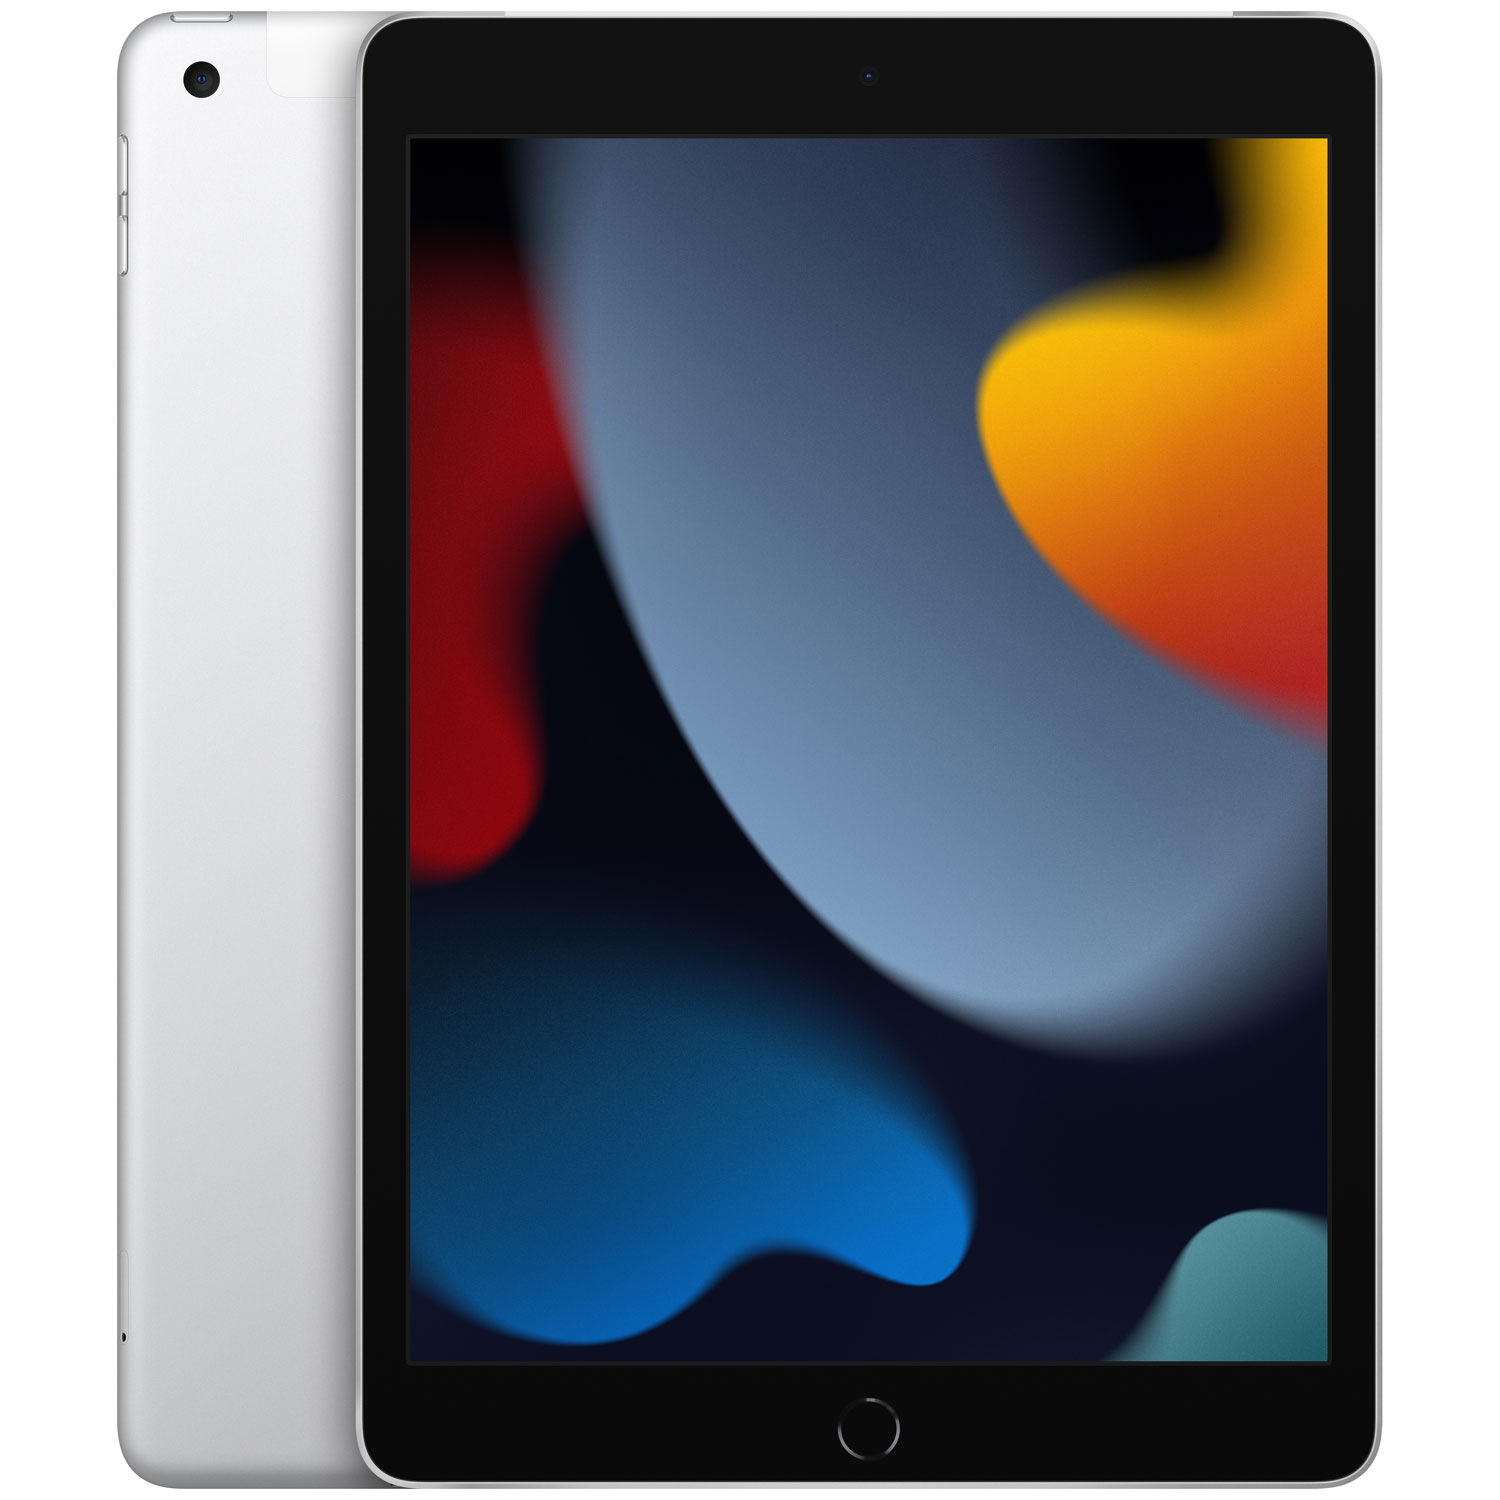 Apple iPad 10.2" 64GB with Wi-Fi & 4G LTE (9th Generation) - Silver